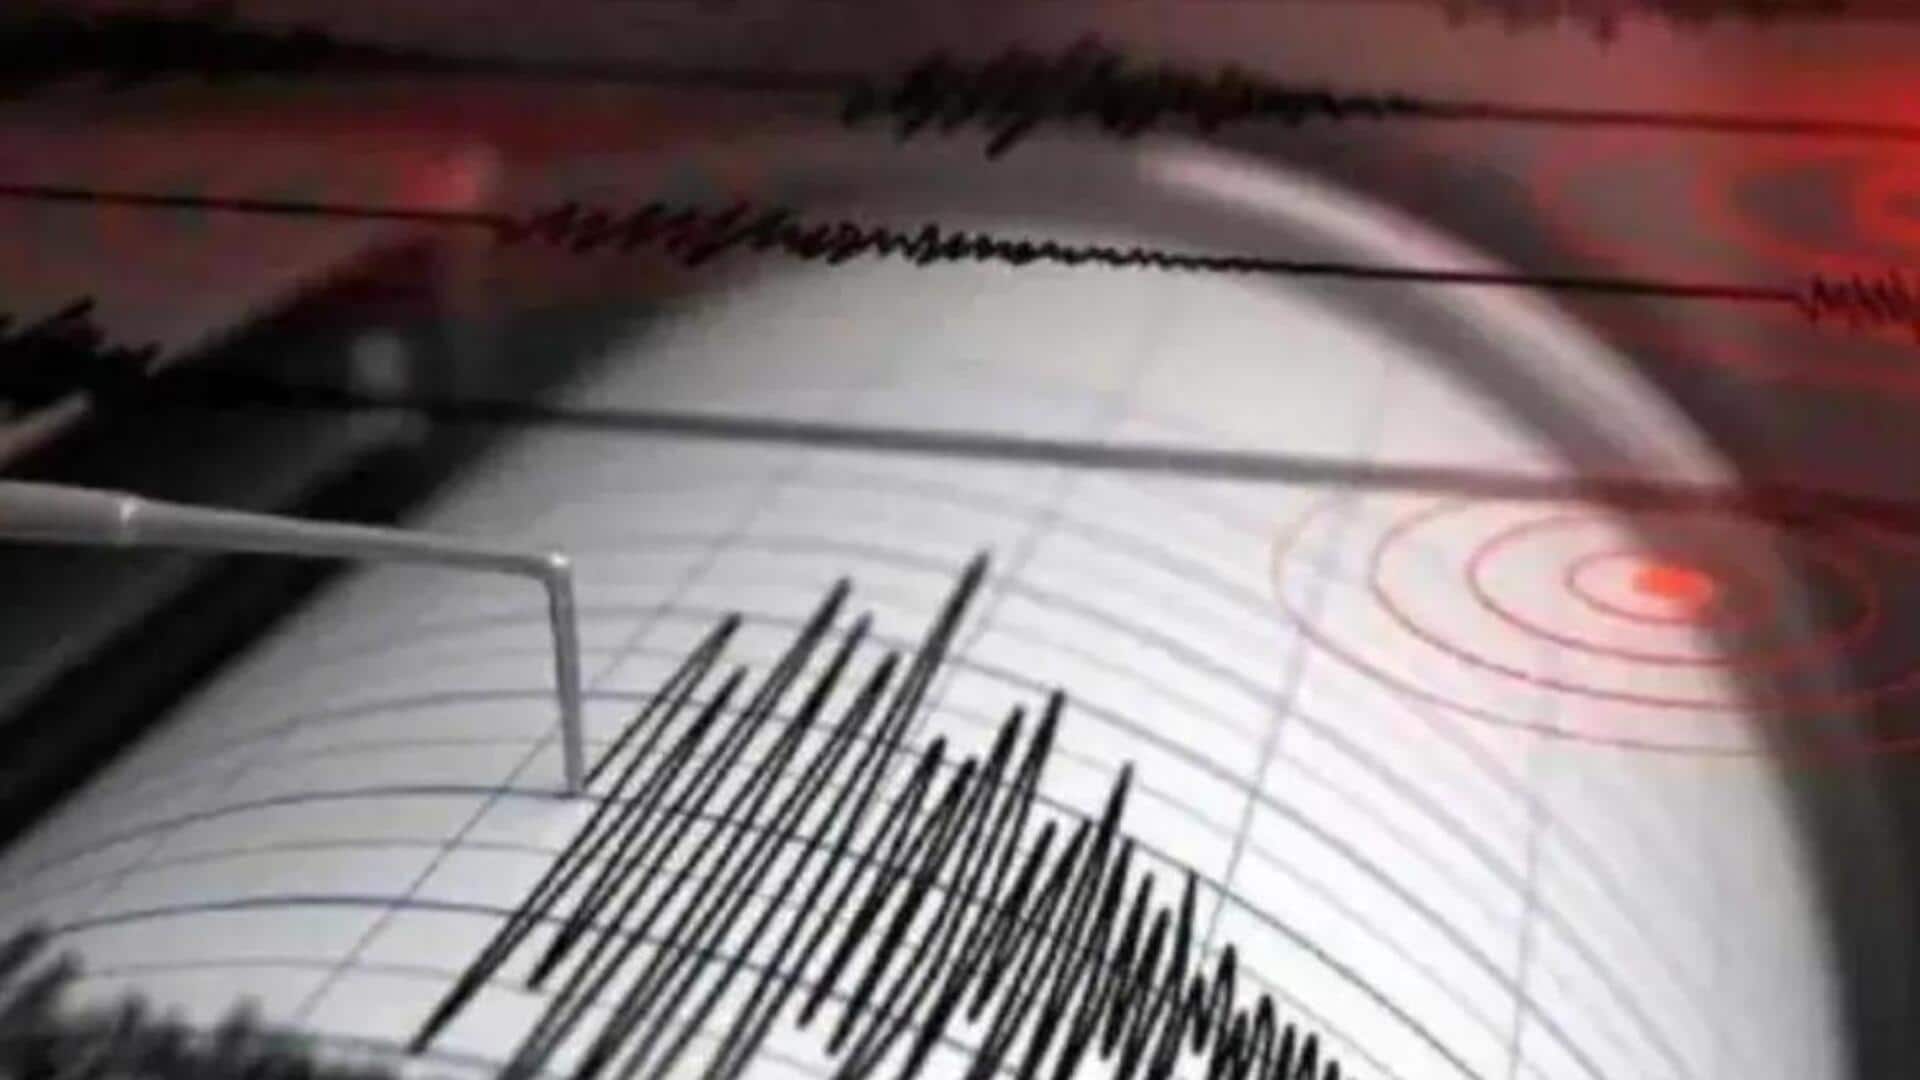 3.1-magnitude earthquake jolts Delhi, neighboring areas: Report